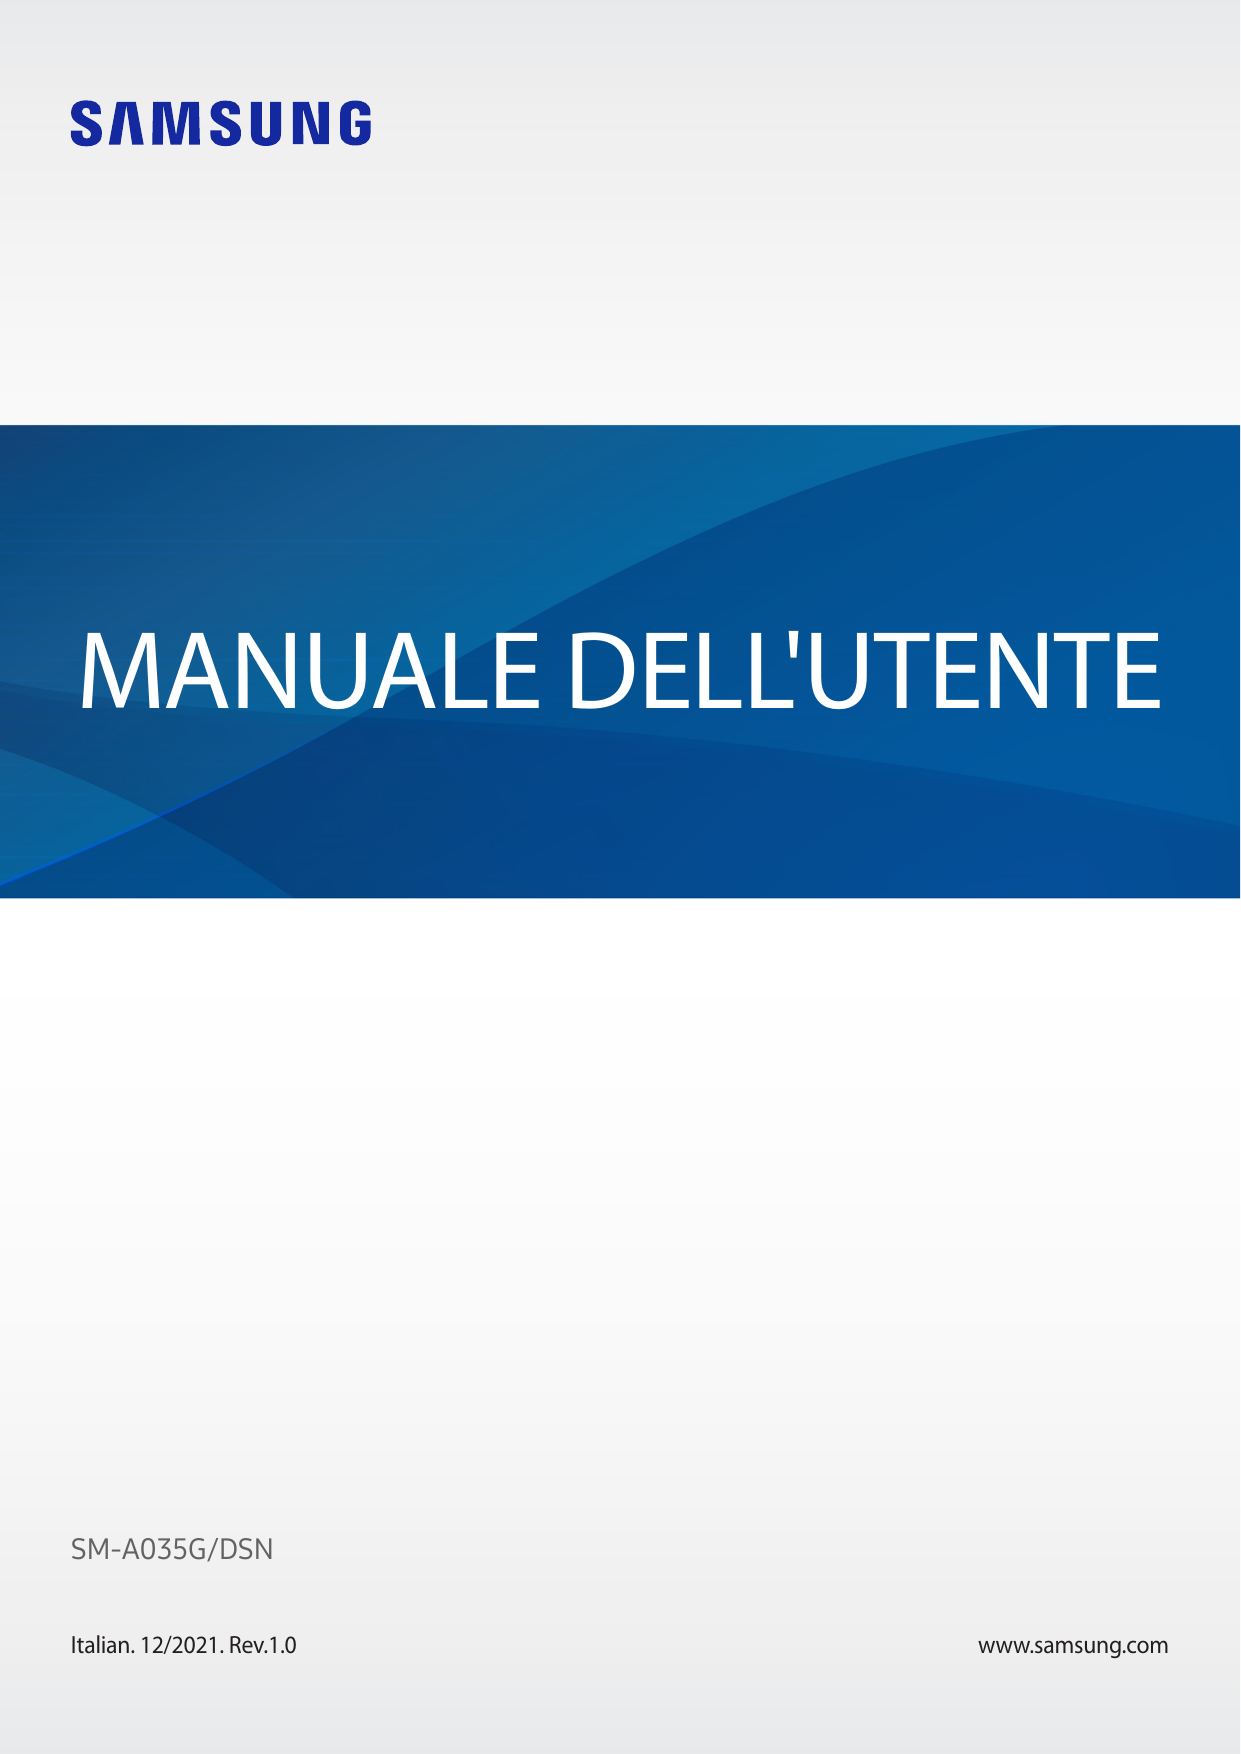 MANUALE DELL'UTENTESM-A035G/DSNItalian. 12/2021. Rev.1.0www.samsung.com